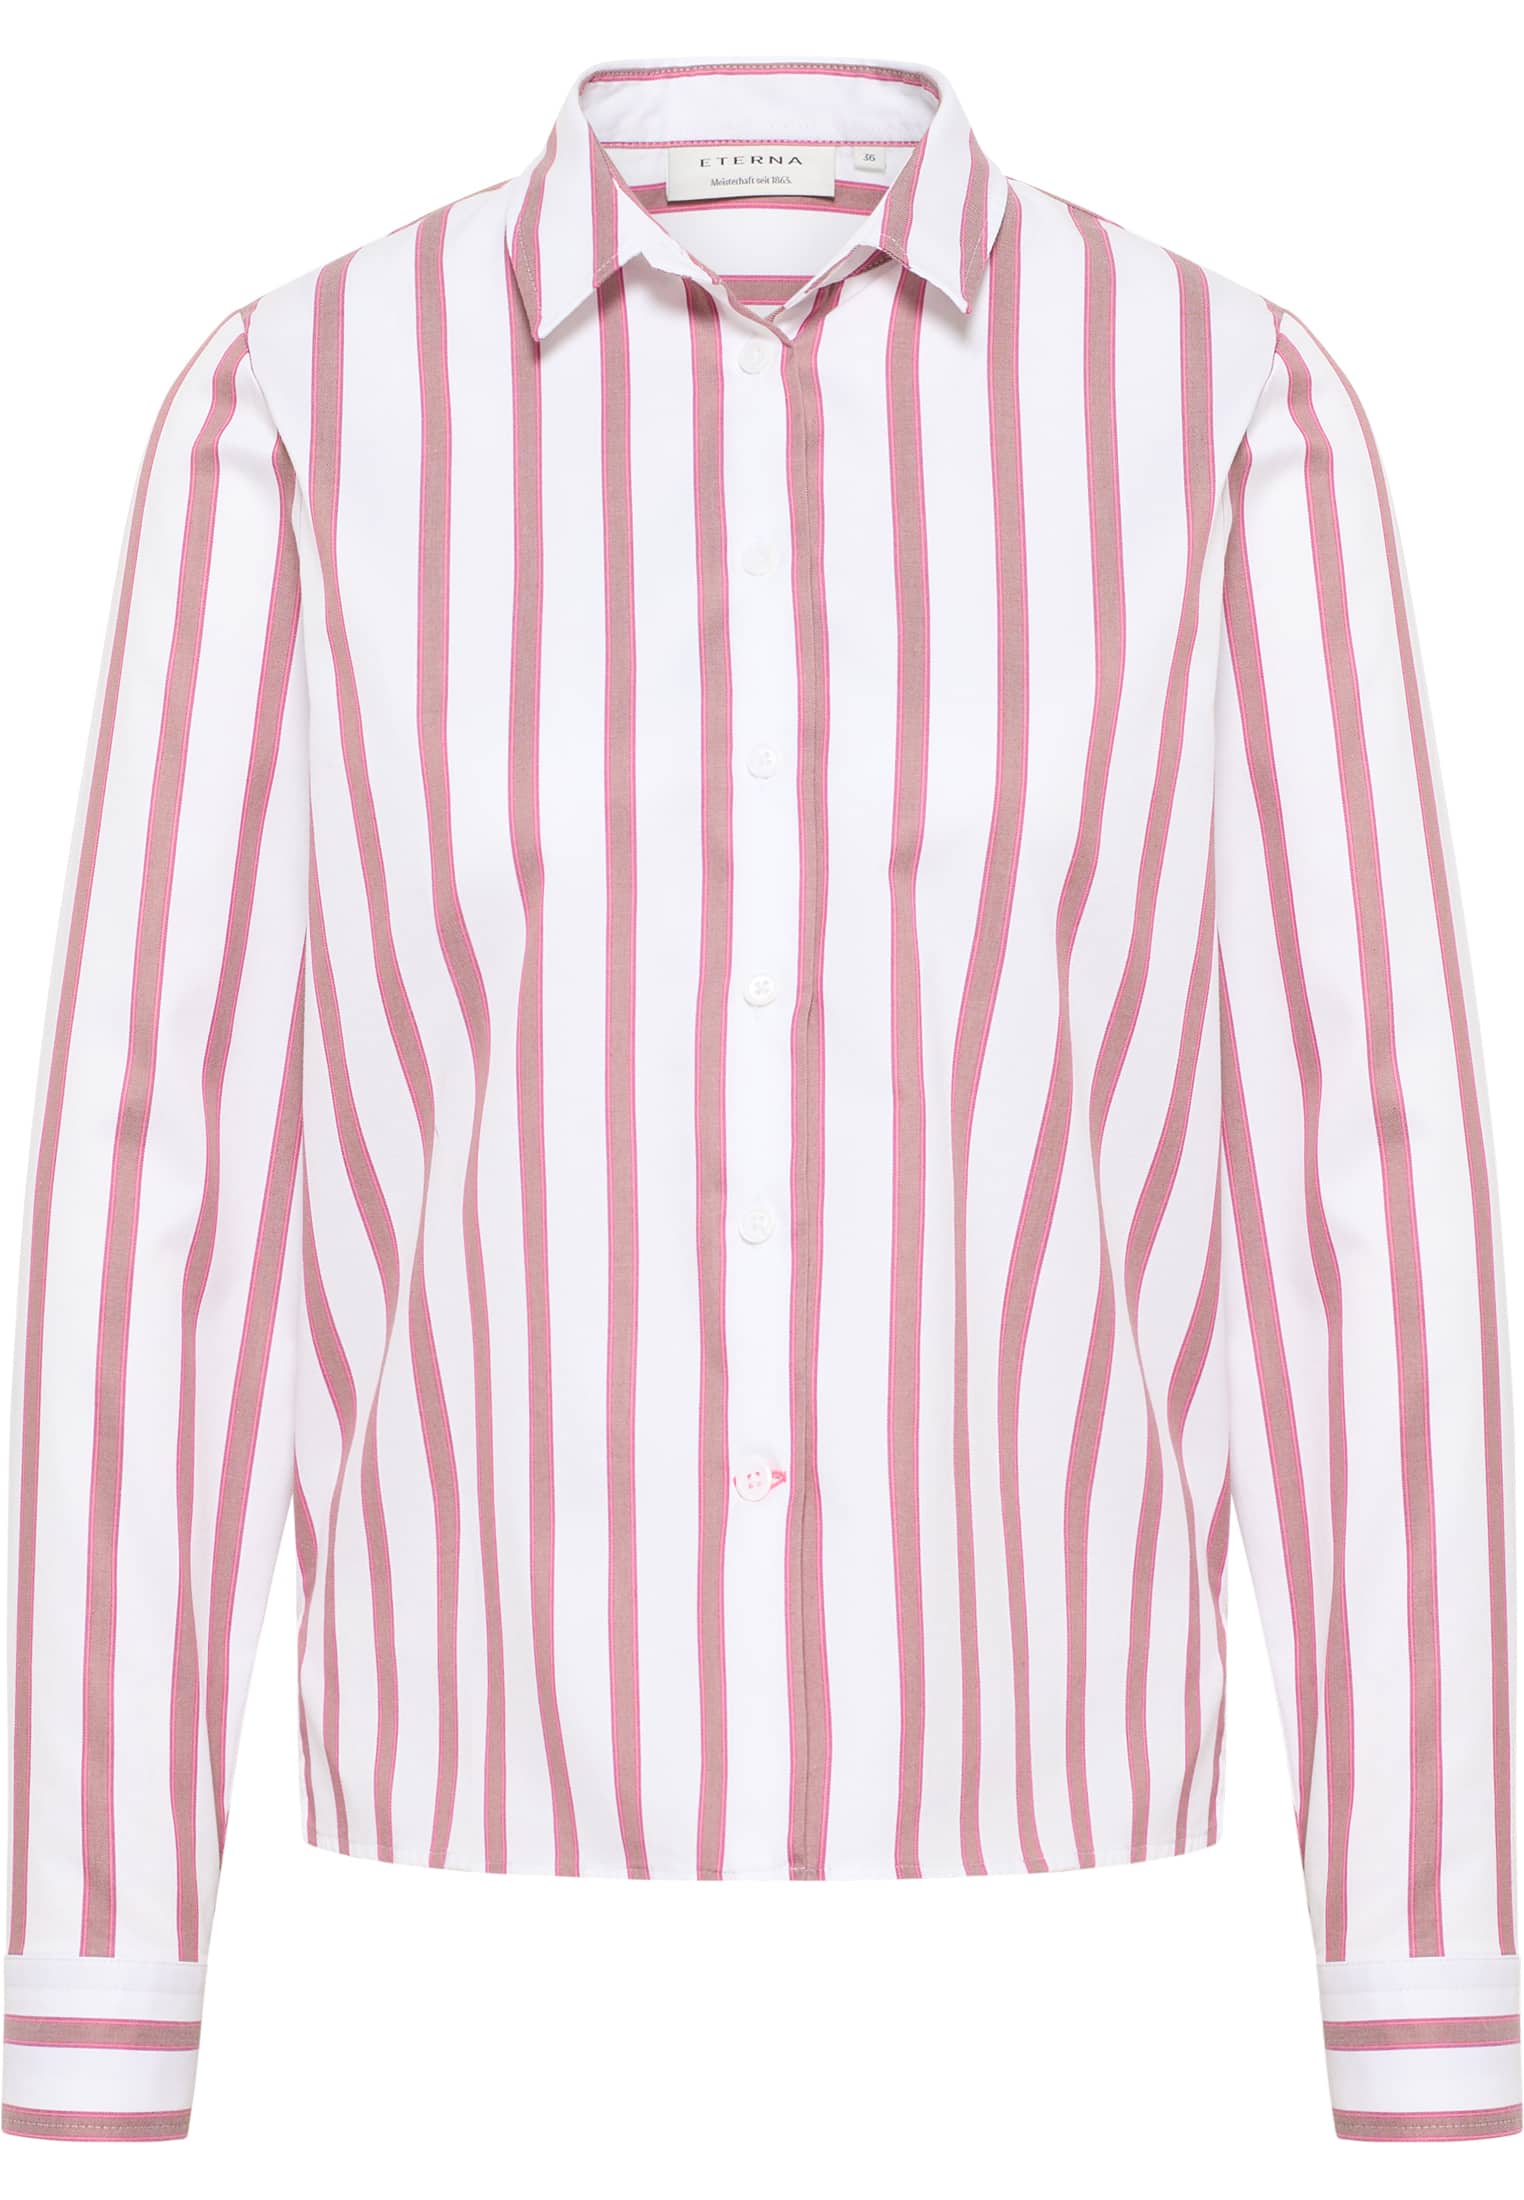 Soft Luxury pink Bluse 46 in | pink gestreift | | Shirt | 2BL04213-15-21-46-1/1 Langarm